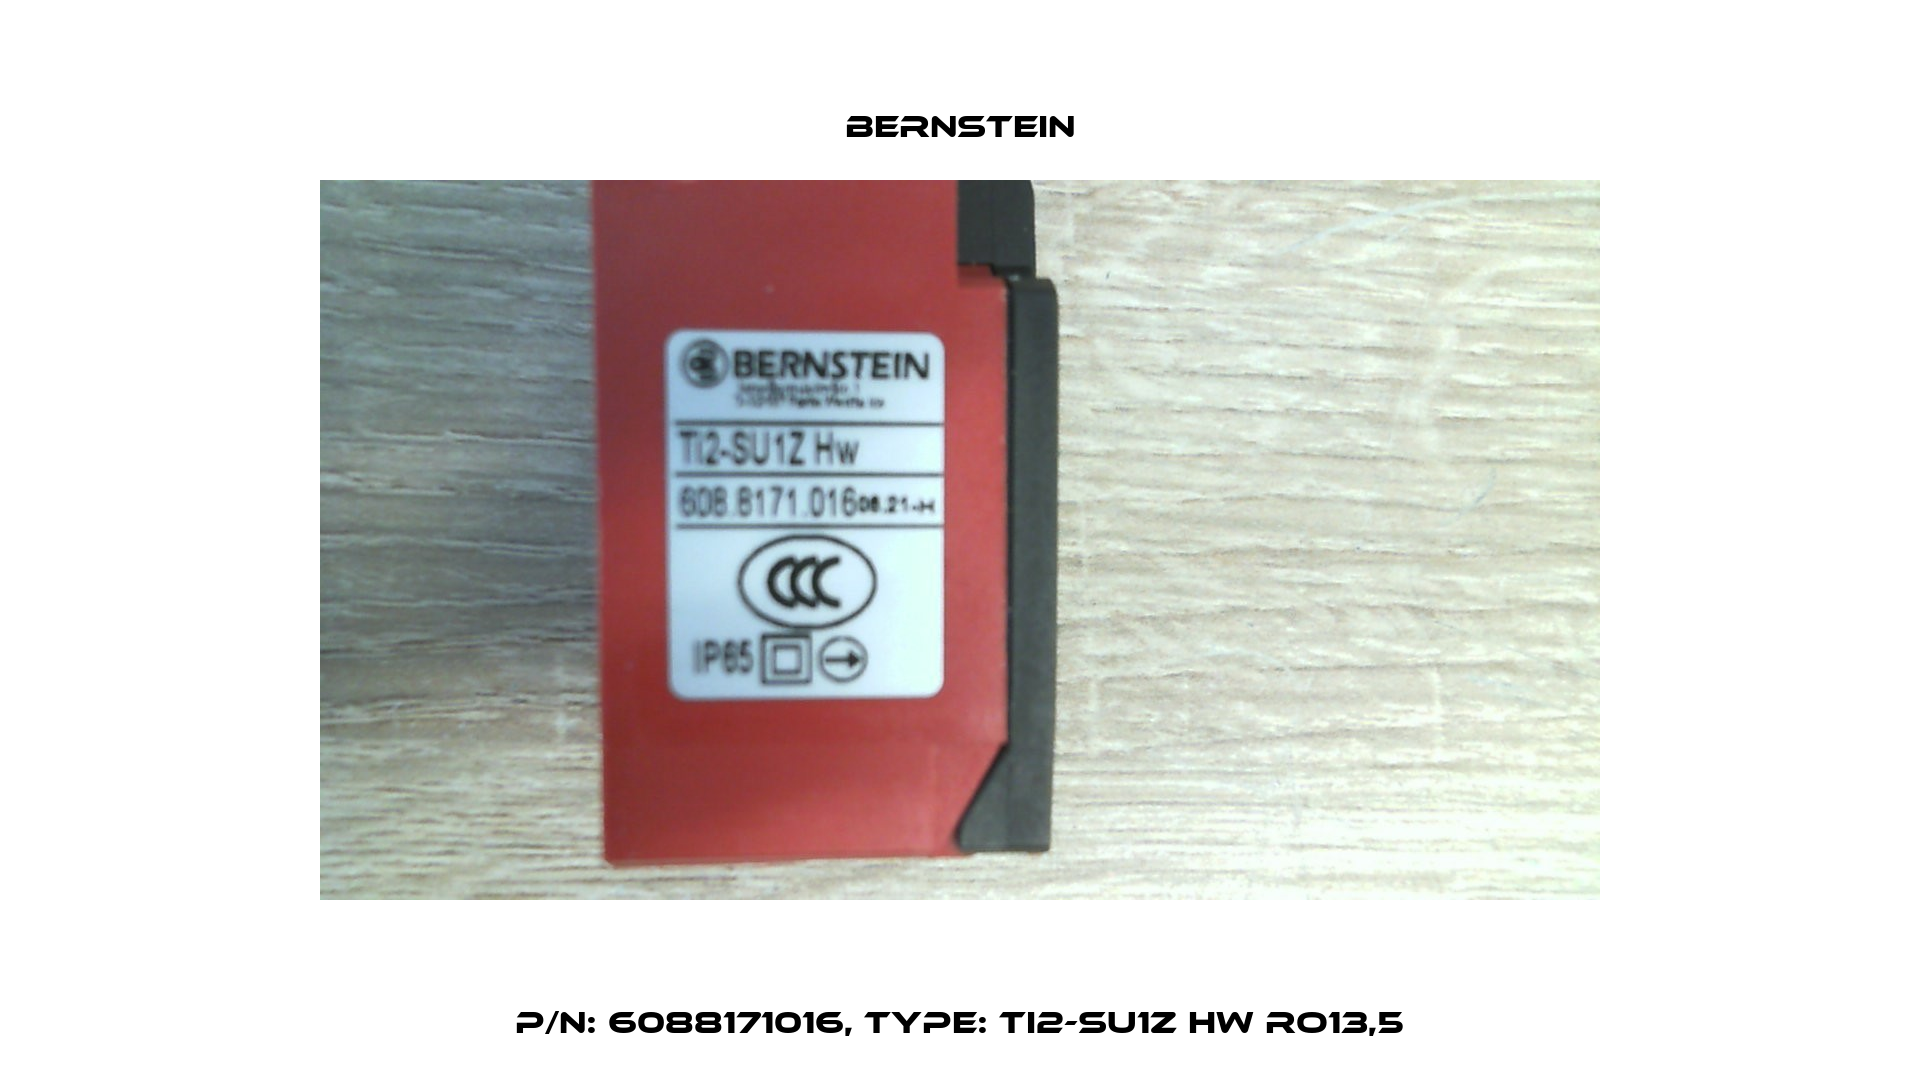 P/N: 6088171016, Type: TI2-SU1Z HW RO13,5 Bernstein